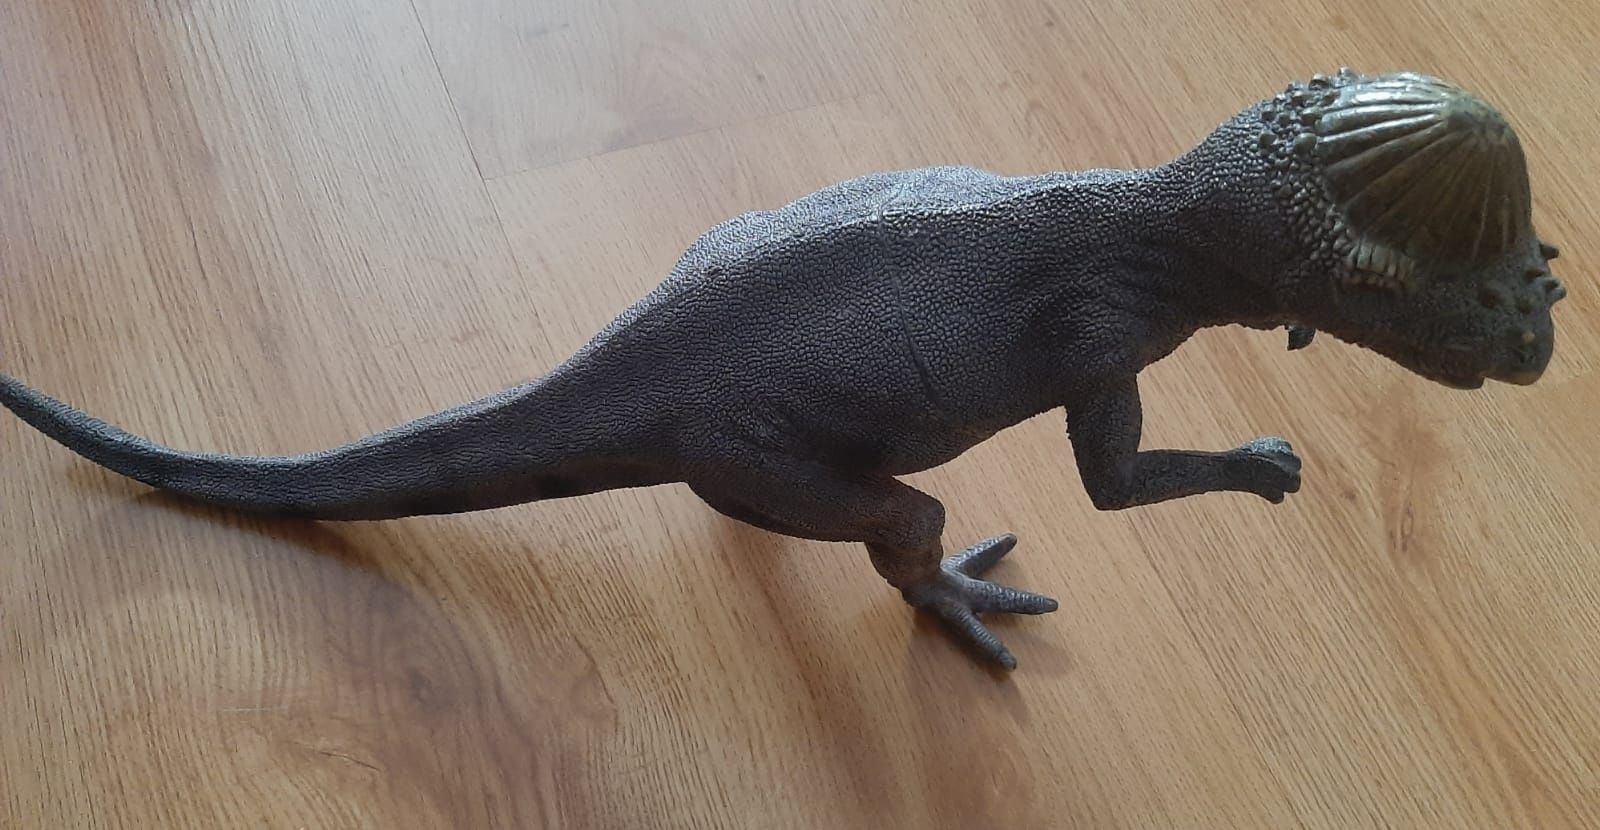 Dinozaur duży kolekcjonerski